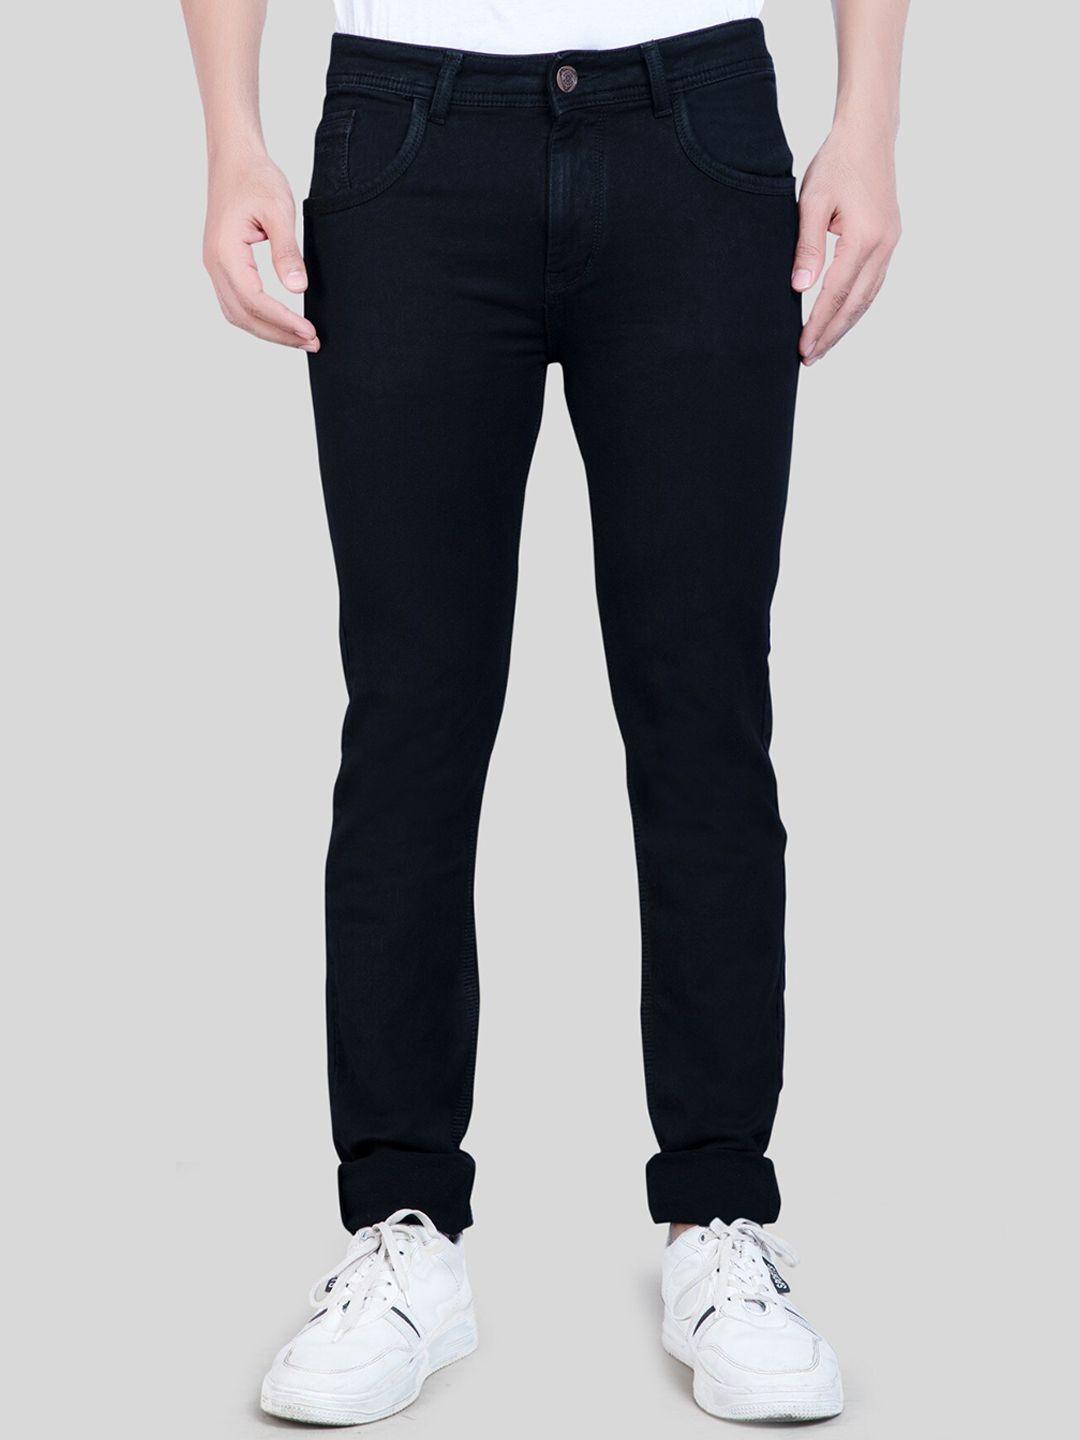 hj-hasasi-men-black-stretchable-jeans